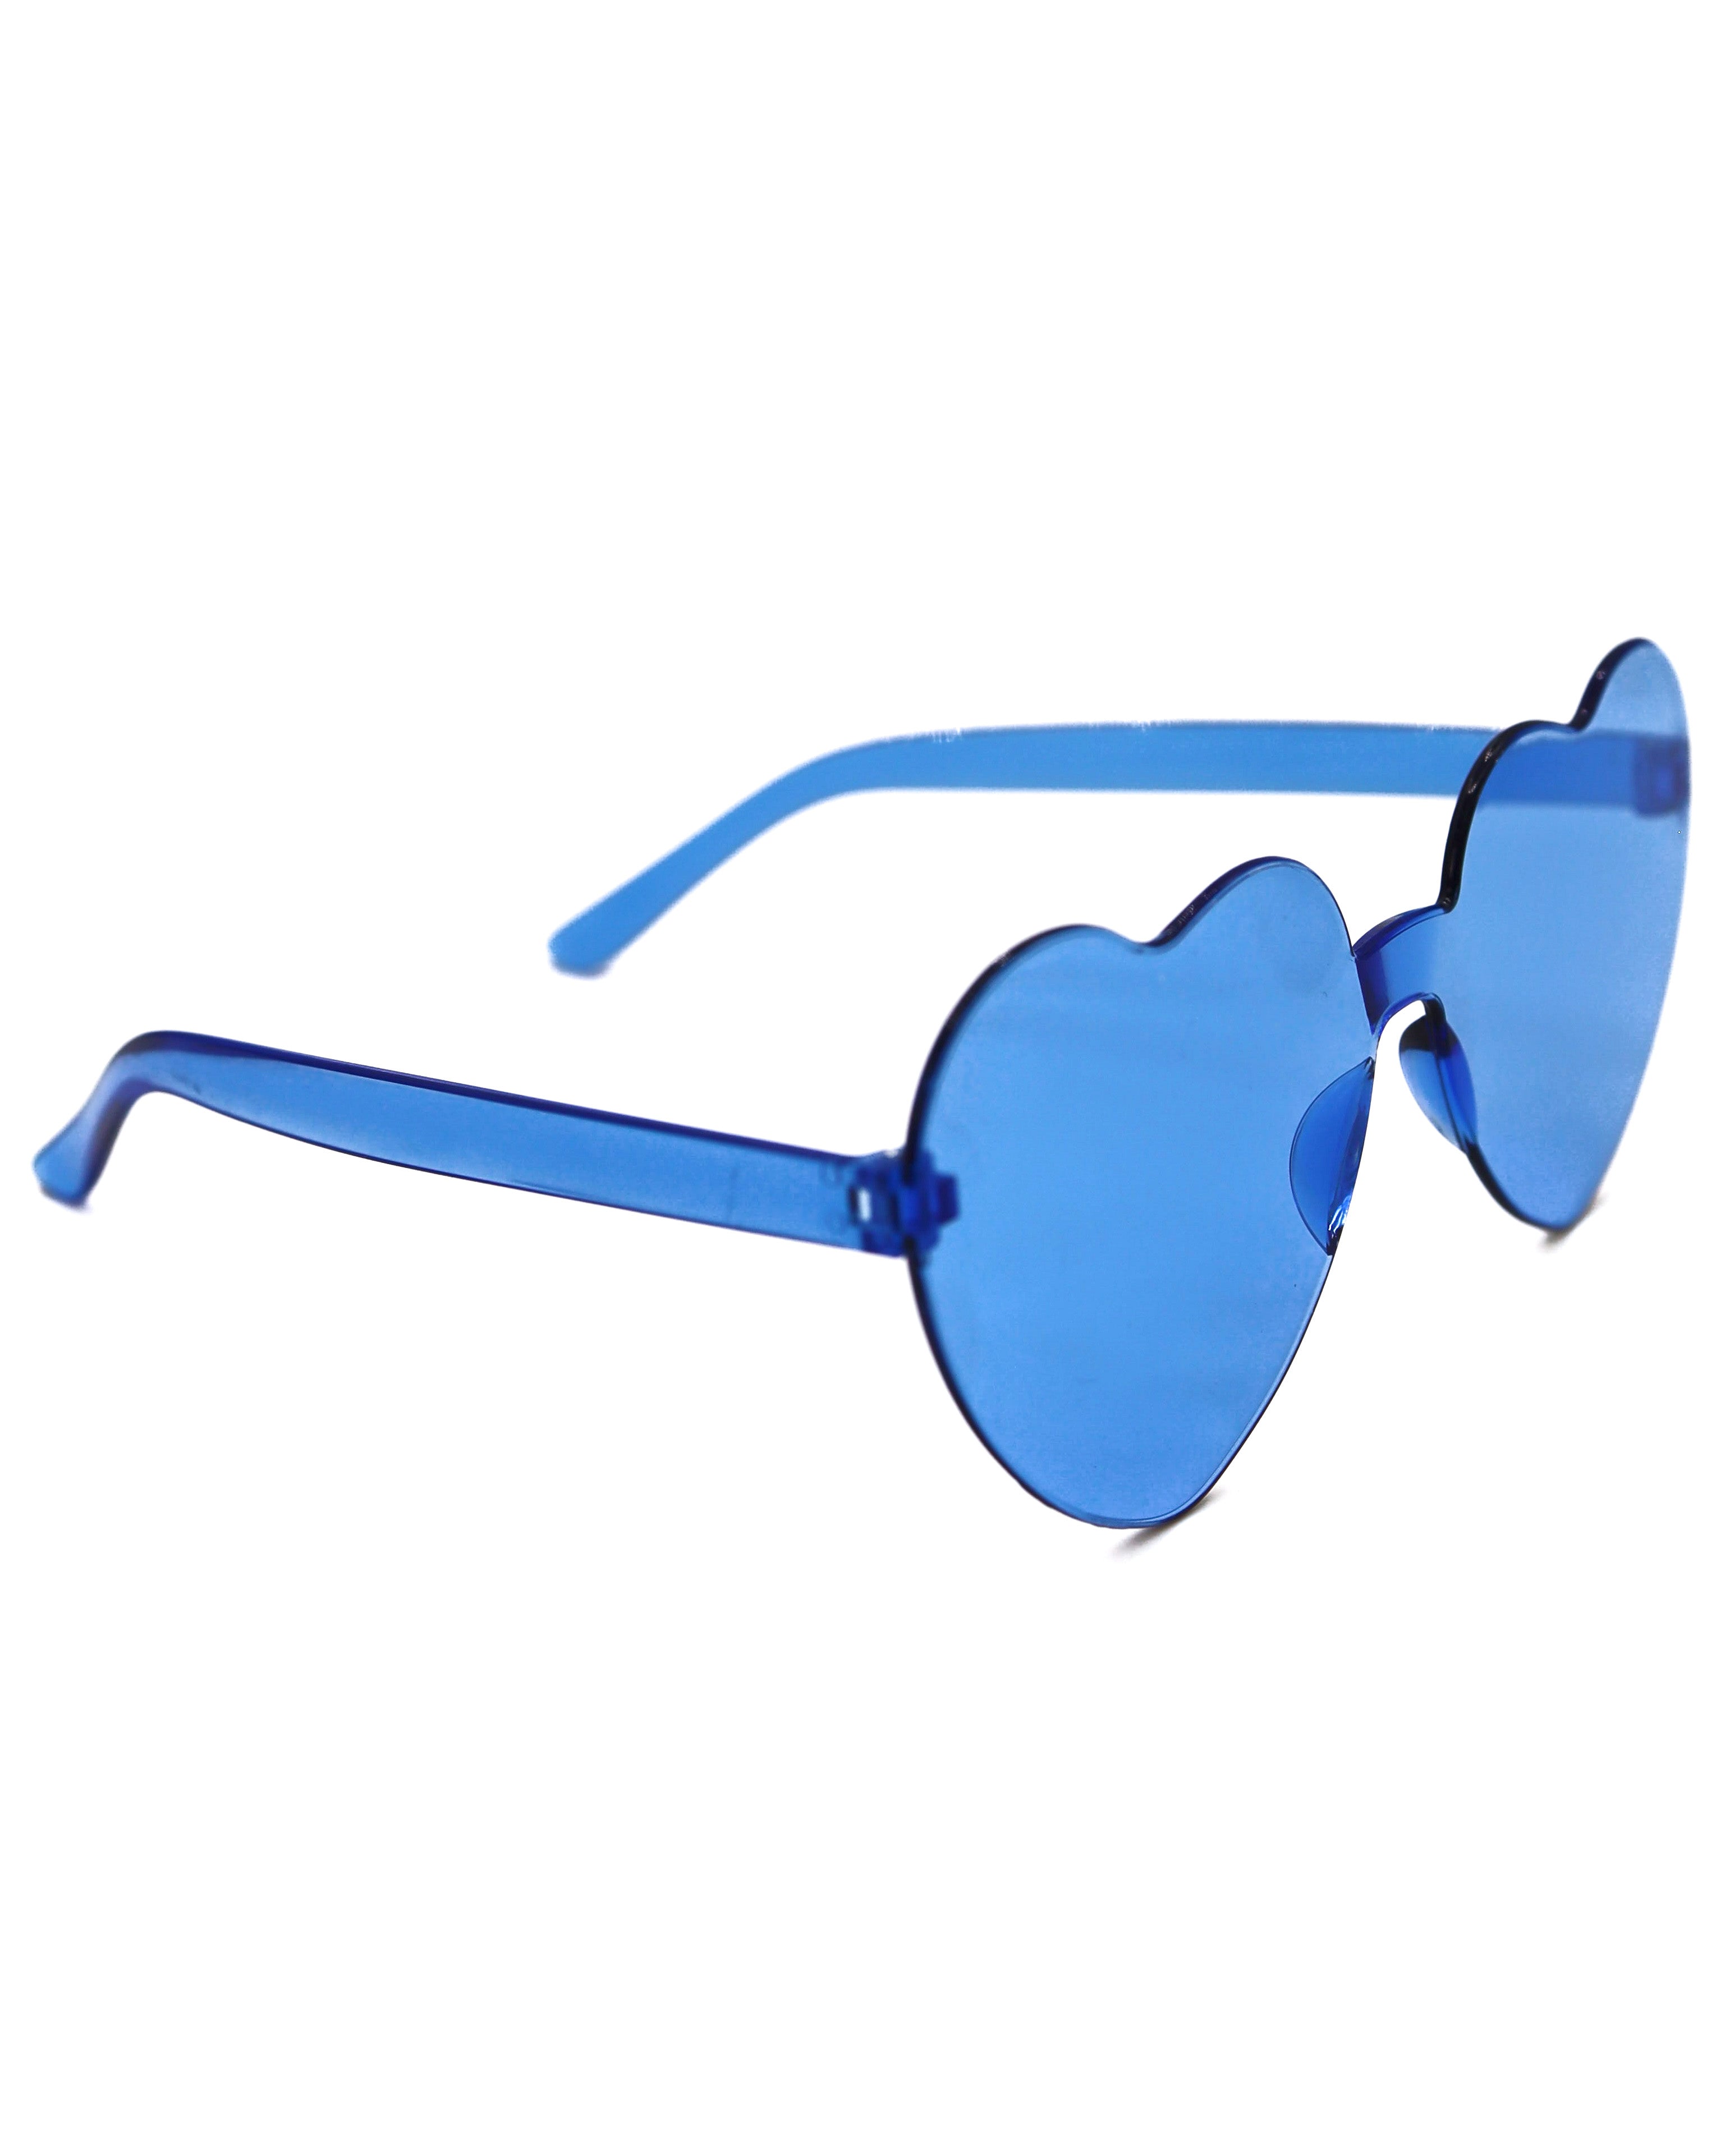 Blue Heart Sunglasses, Heart Sunglasses, - One Stop Rave